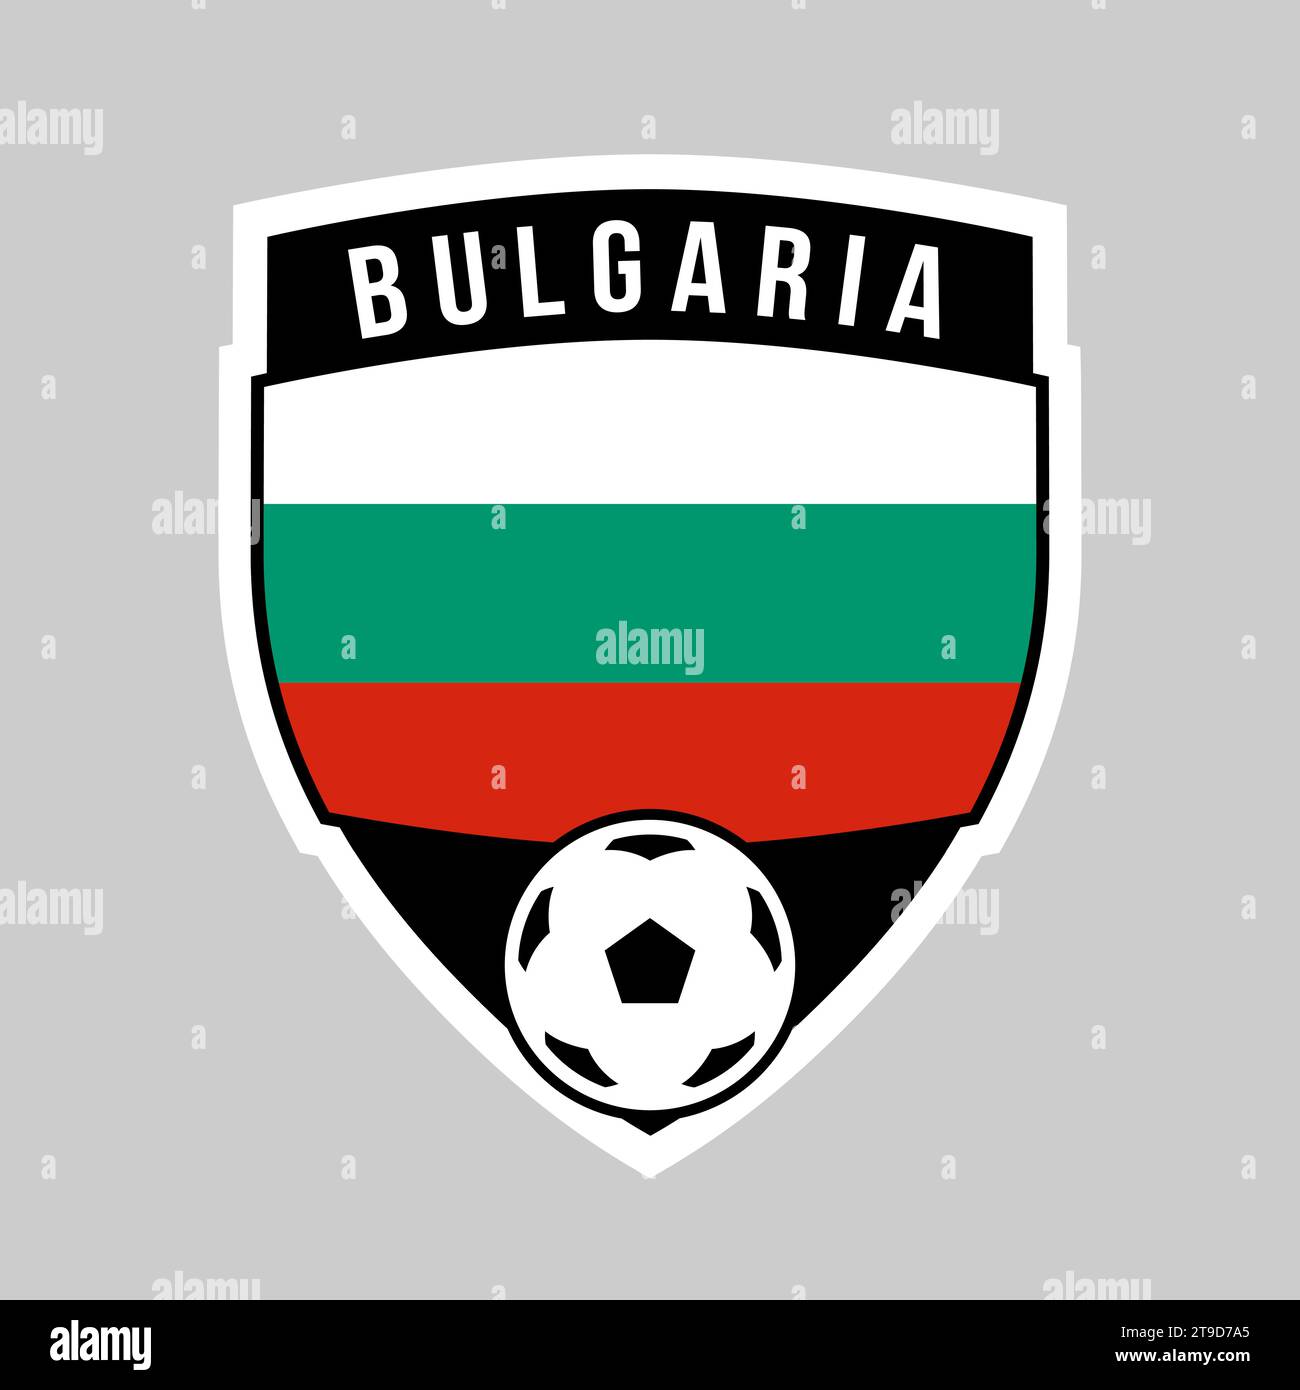 Illustration of Shield Team Badge of Bulgaria for Football Tournament Stock Vector